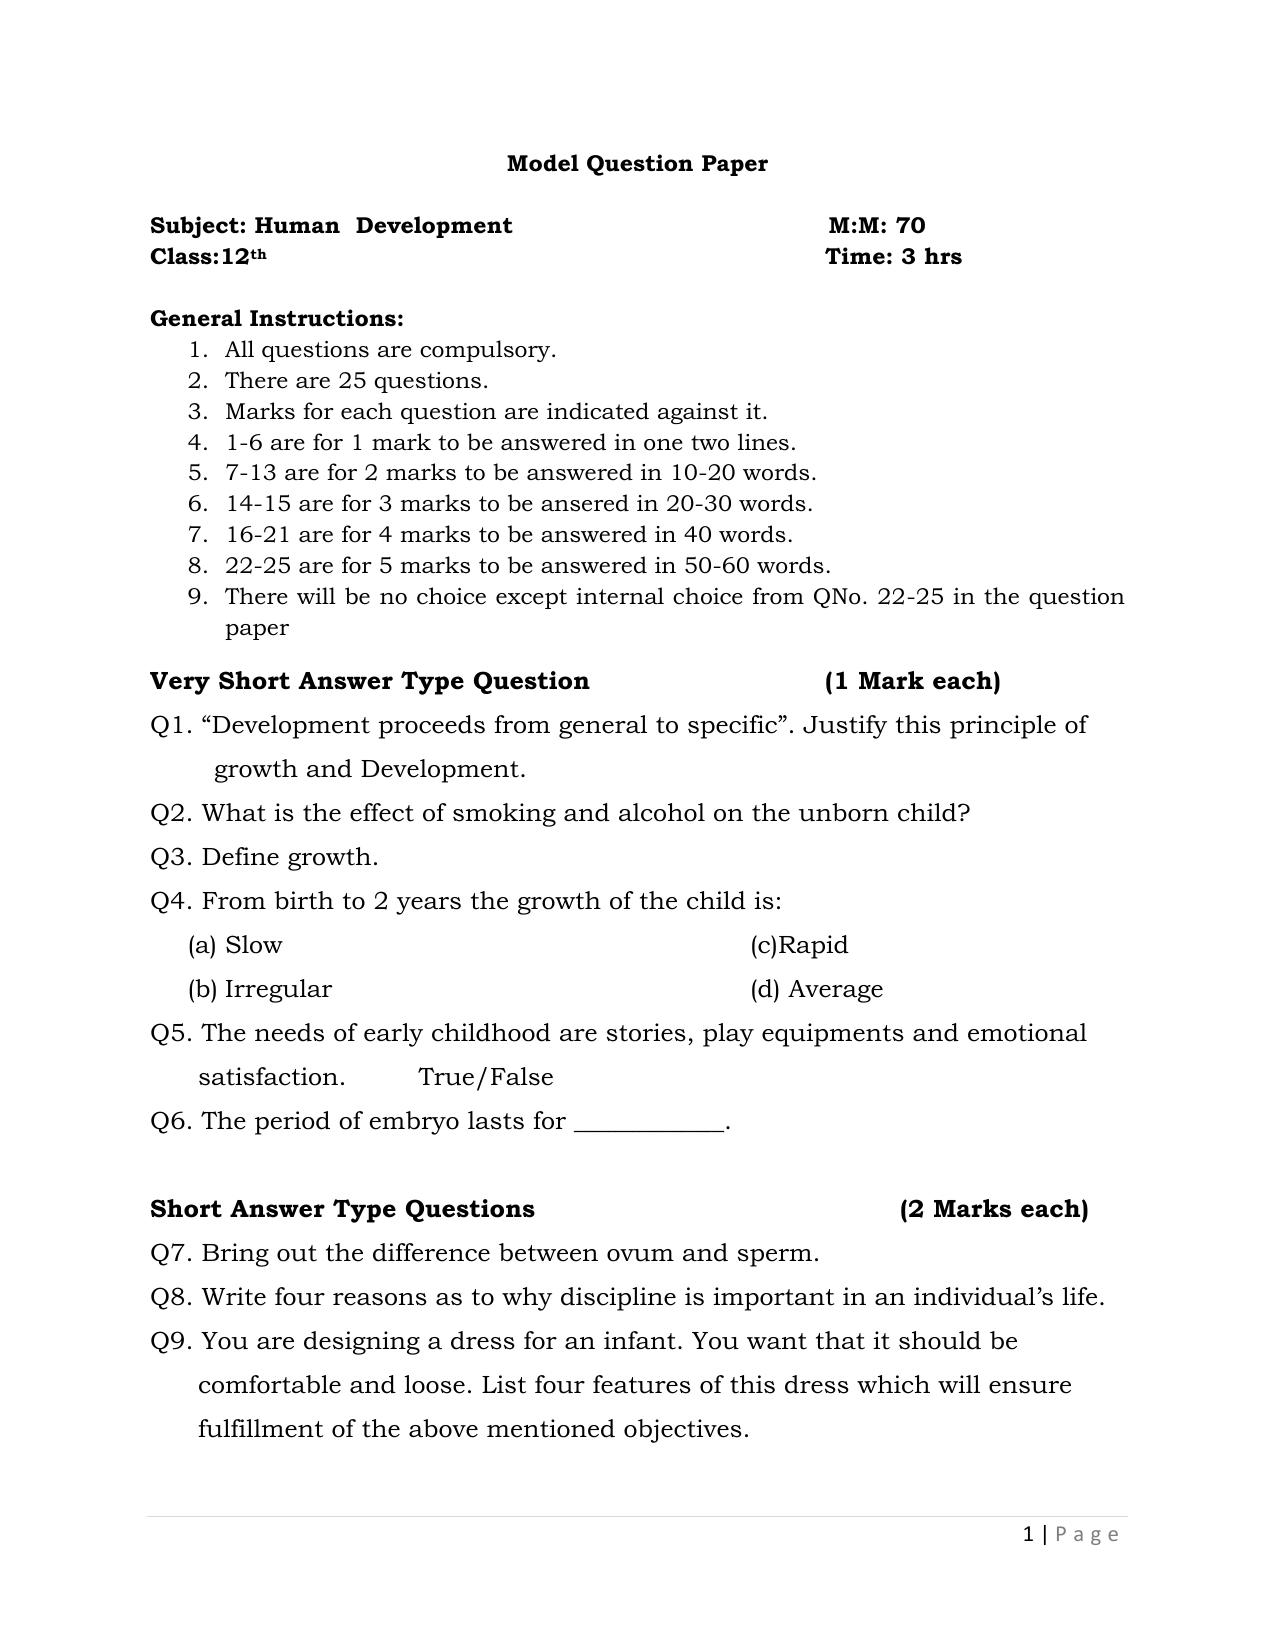 JKBOSE Class 12 Human Development Model Question Paper - Page 1